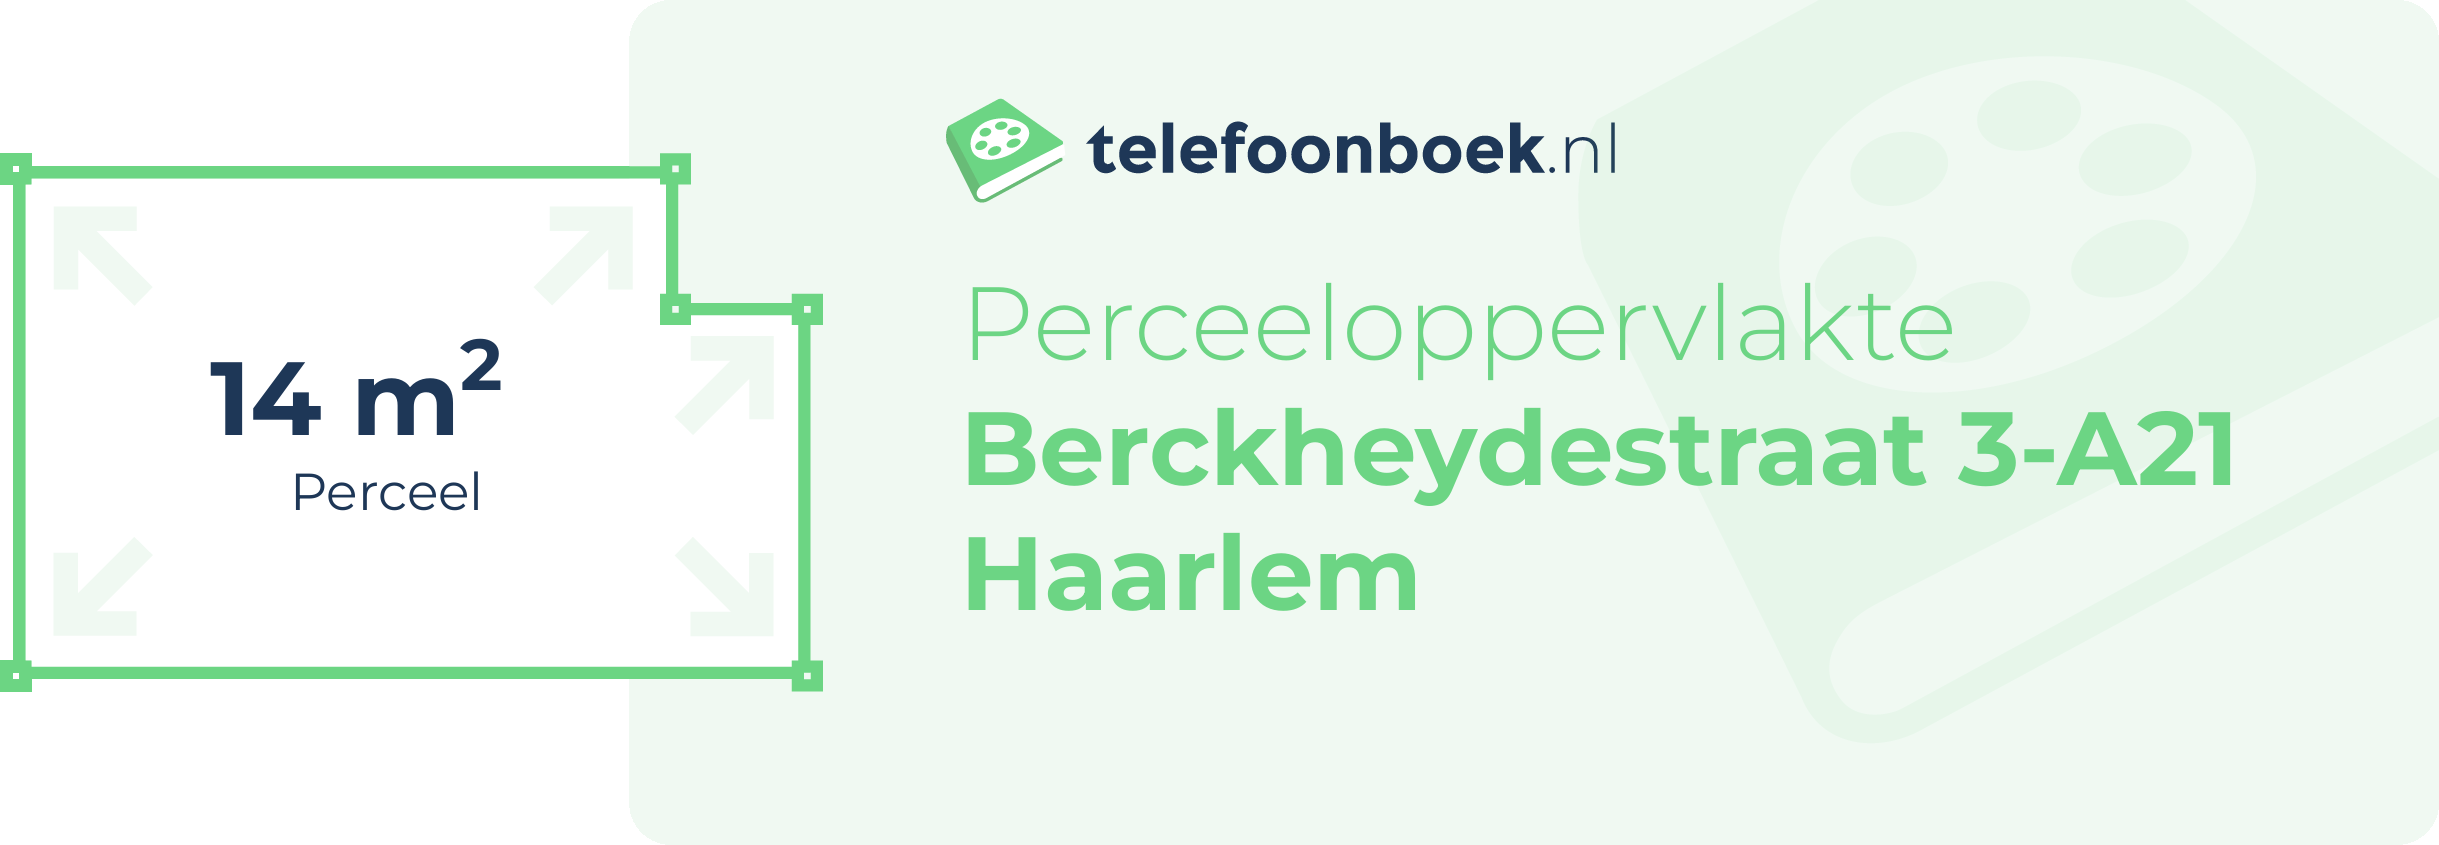 Perceeloppervlakte Berckheydestraat 3-A21 Haarlem